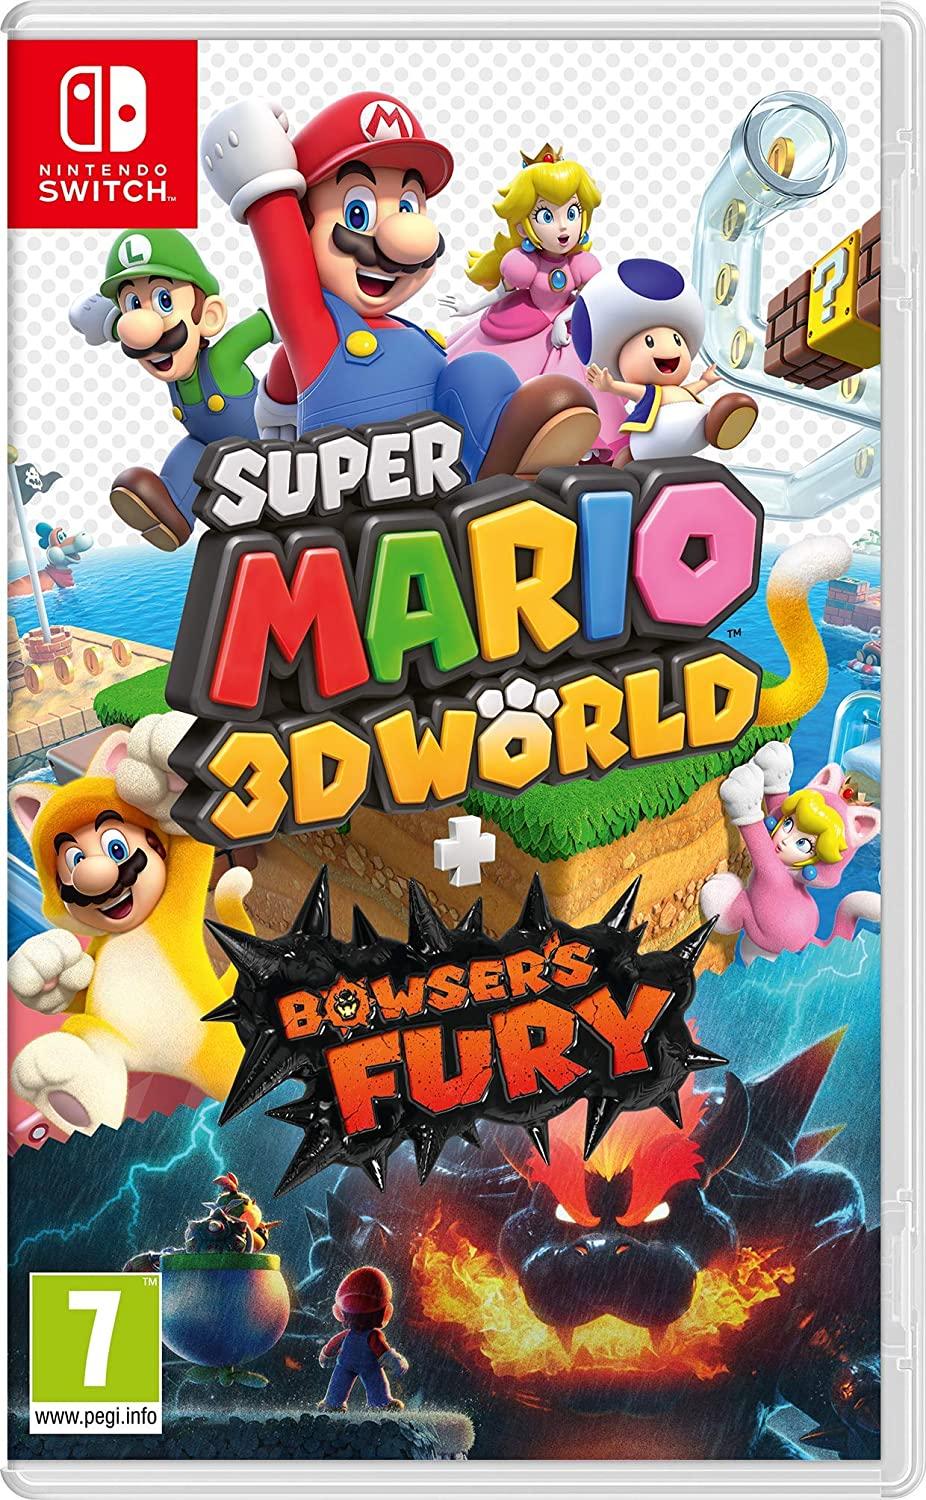 Super mario 3d world